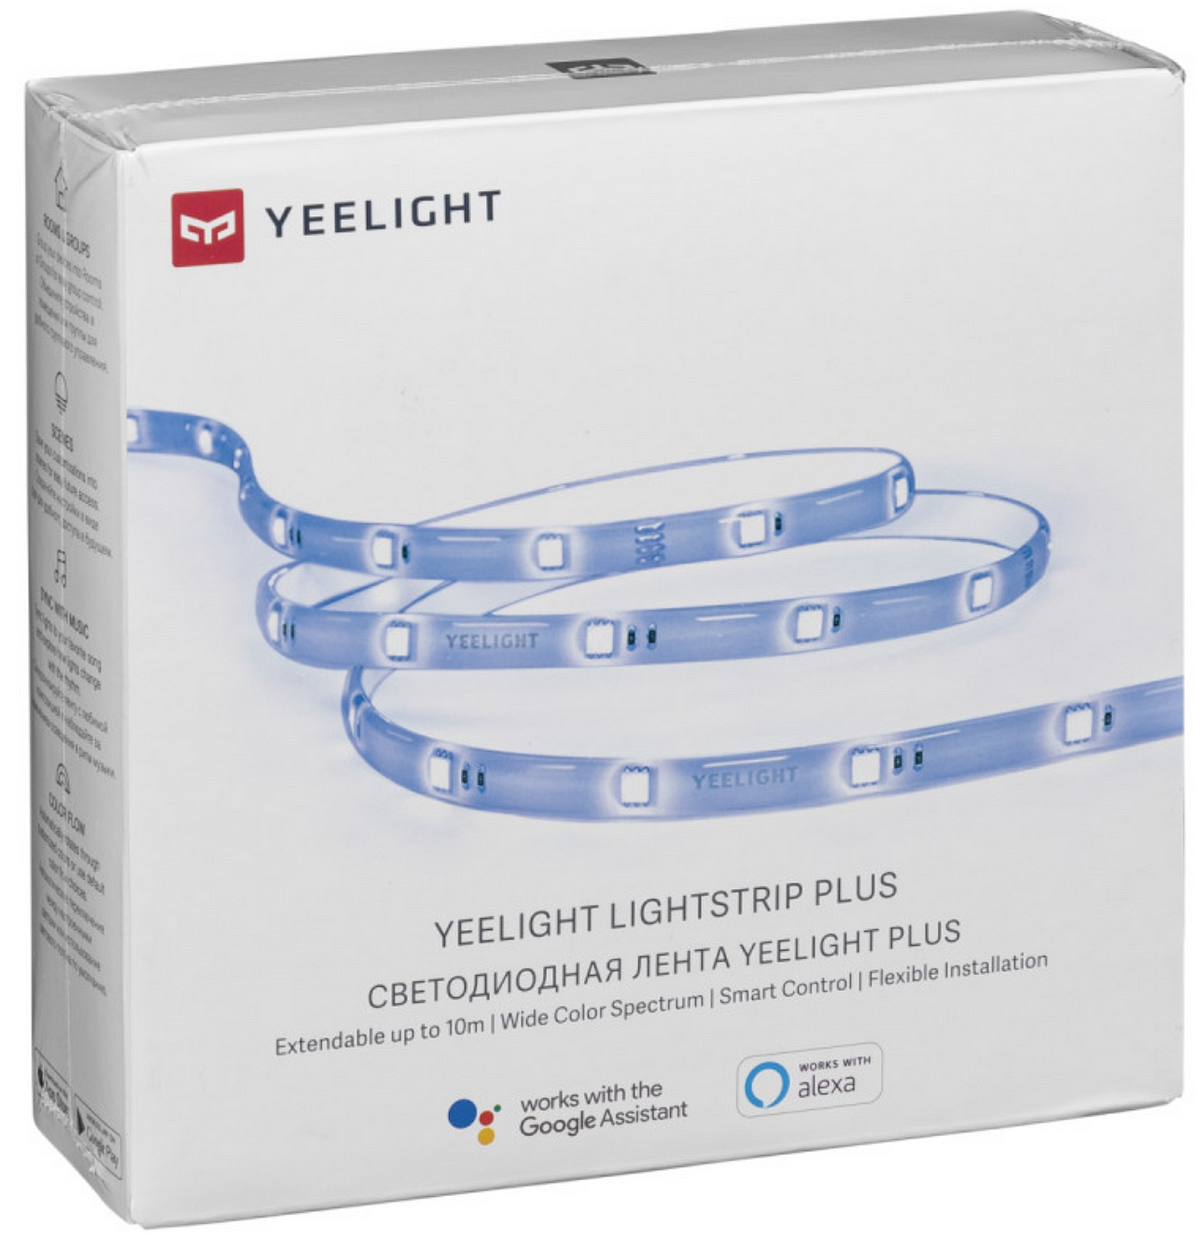 Control Yeelight Lightstrip Plus with Home Assistant | by Ferry Djaja |  Medium